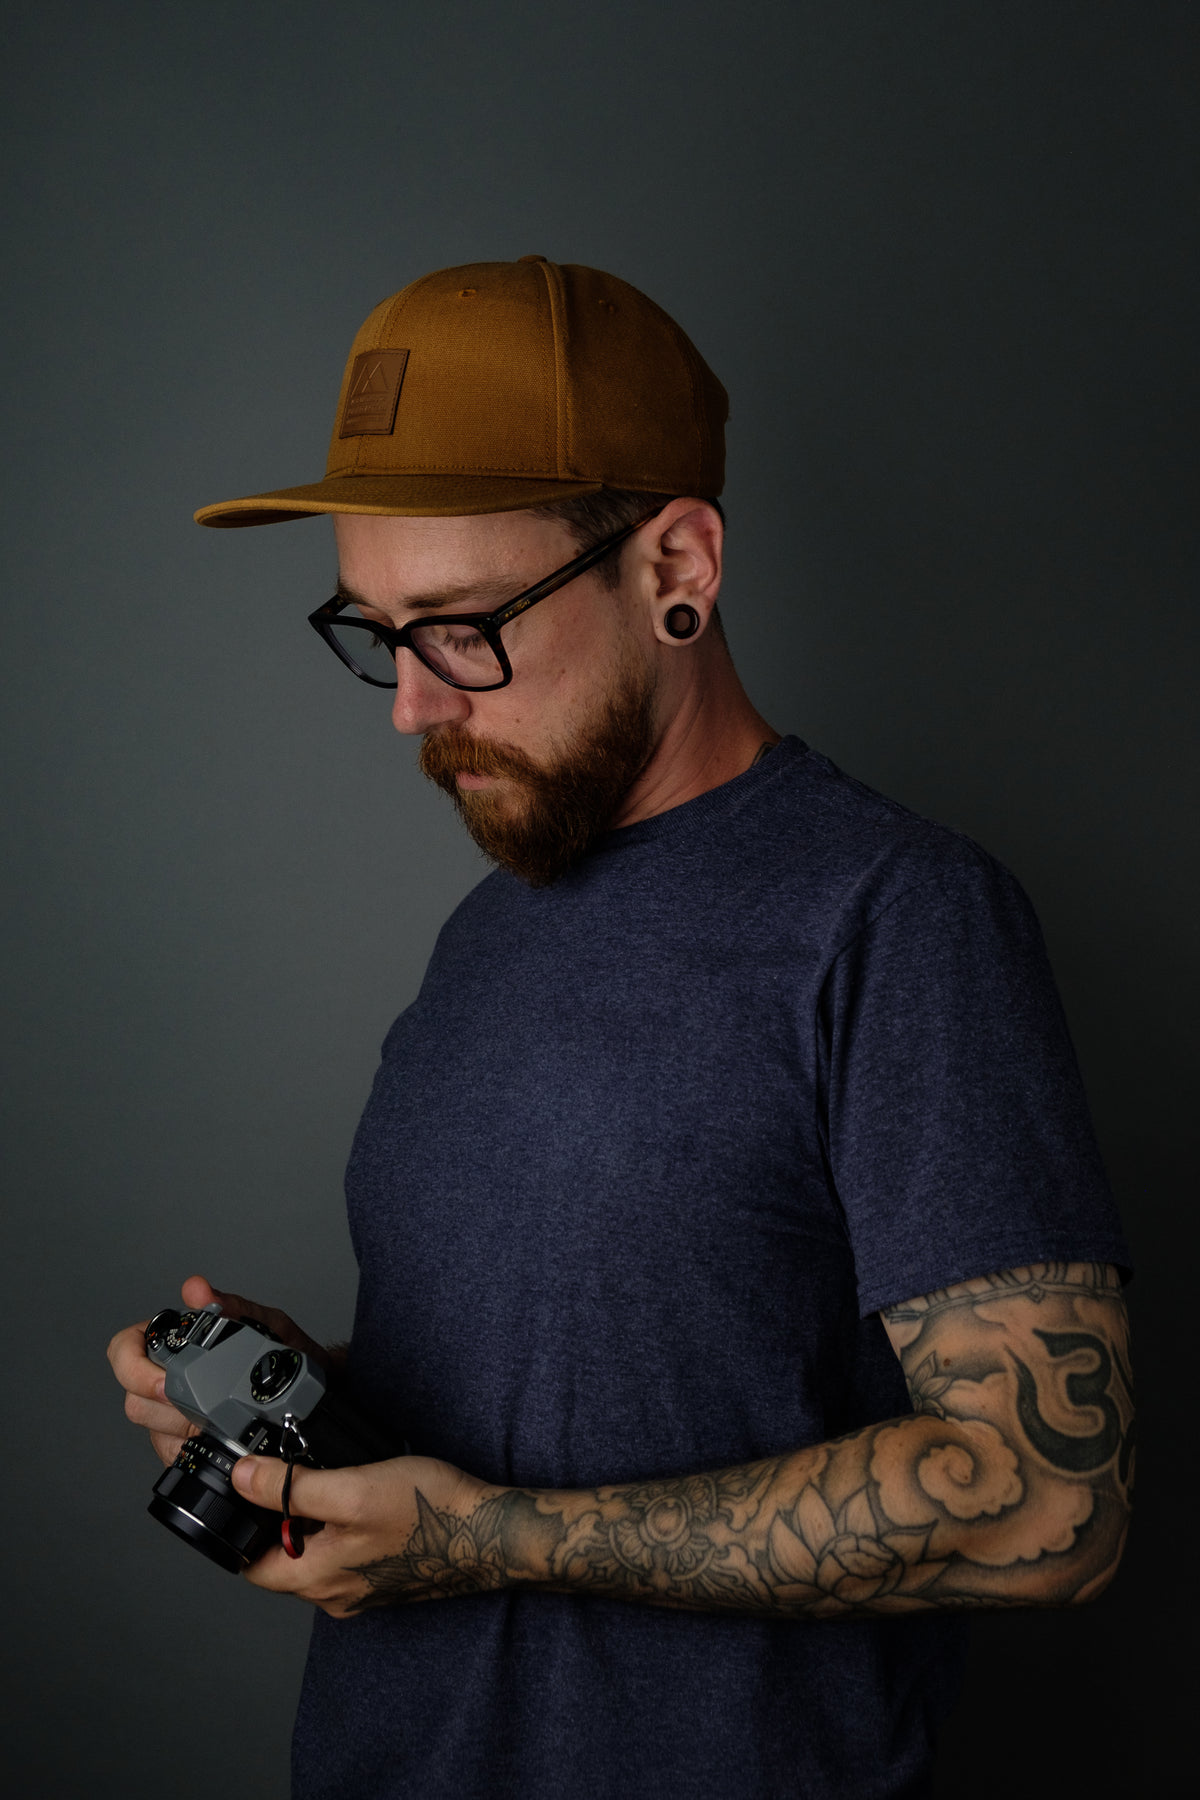 tattooed man holding film camera